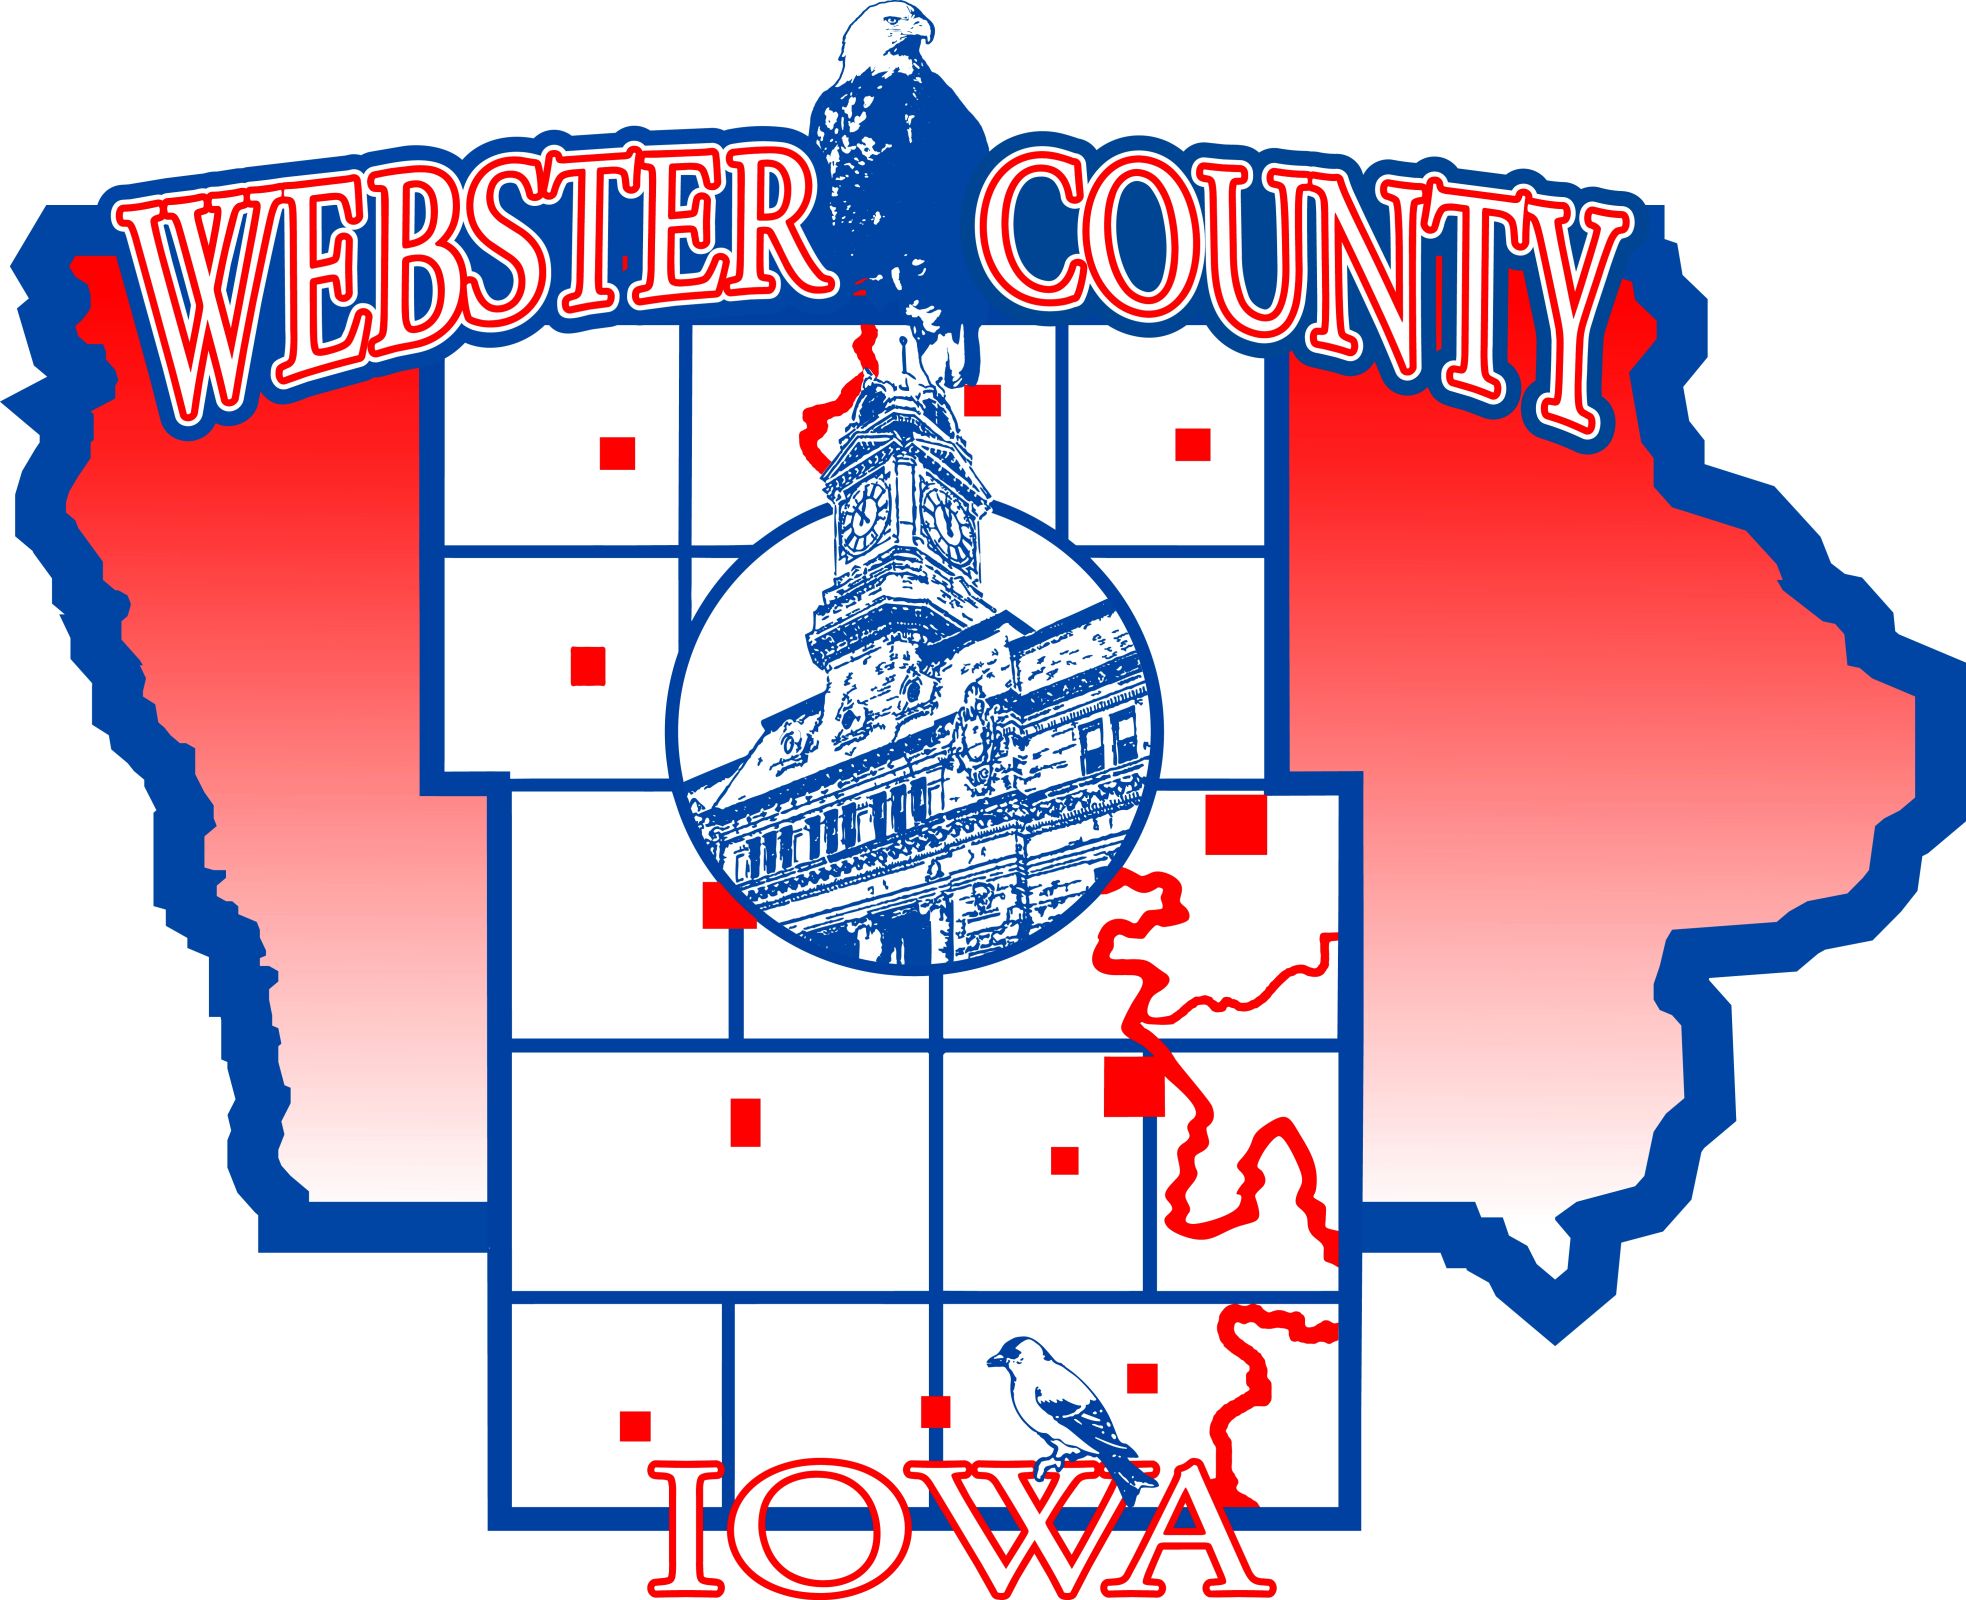 Webster County's Image